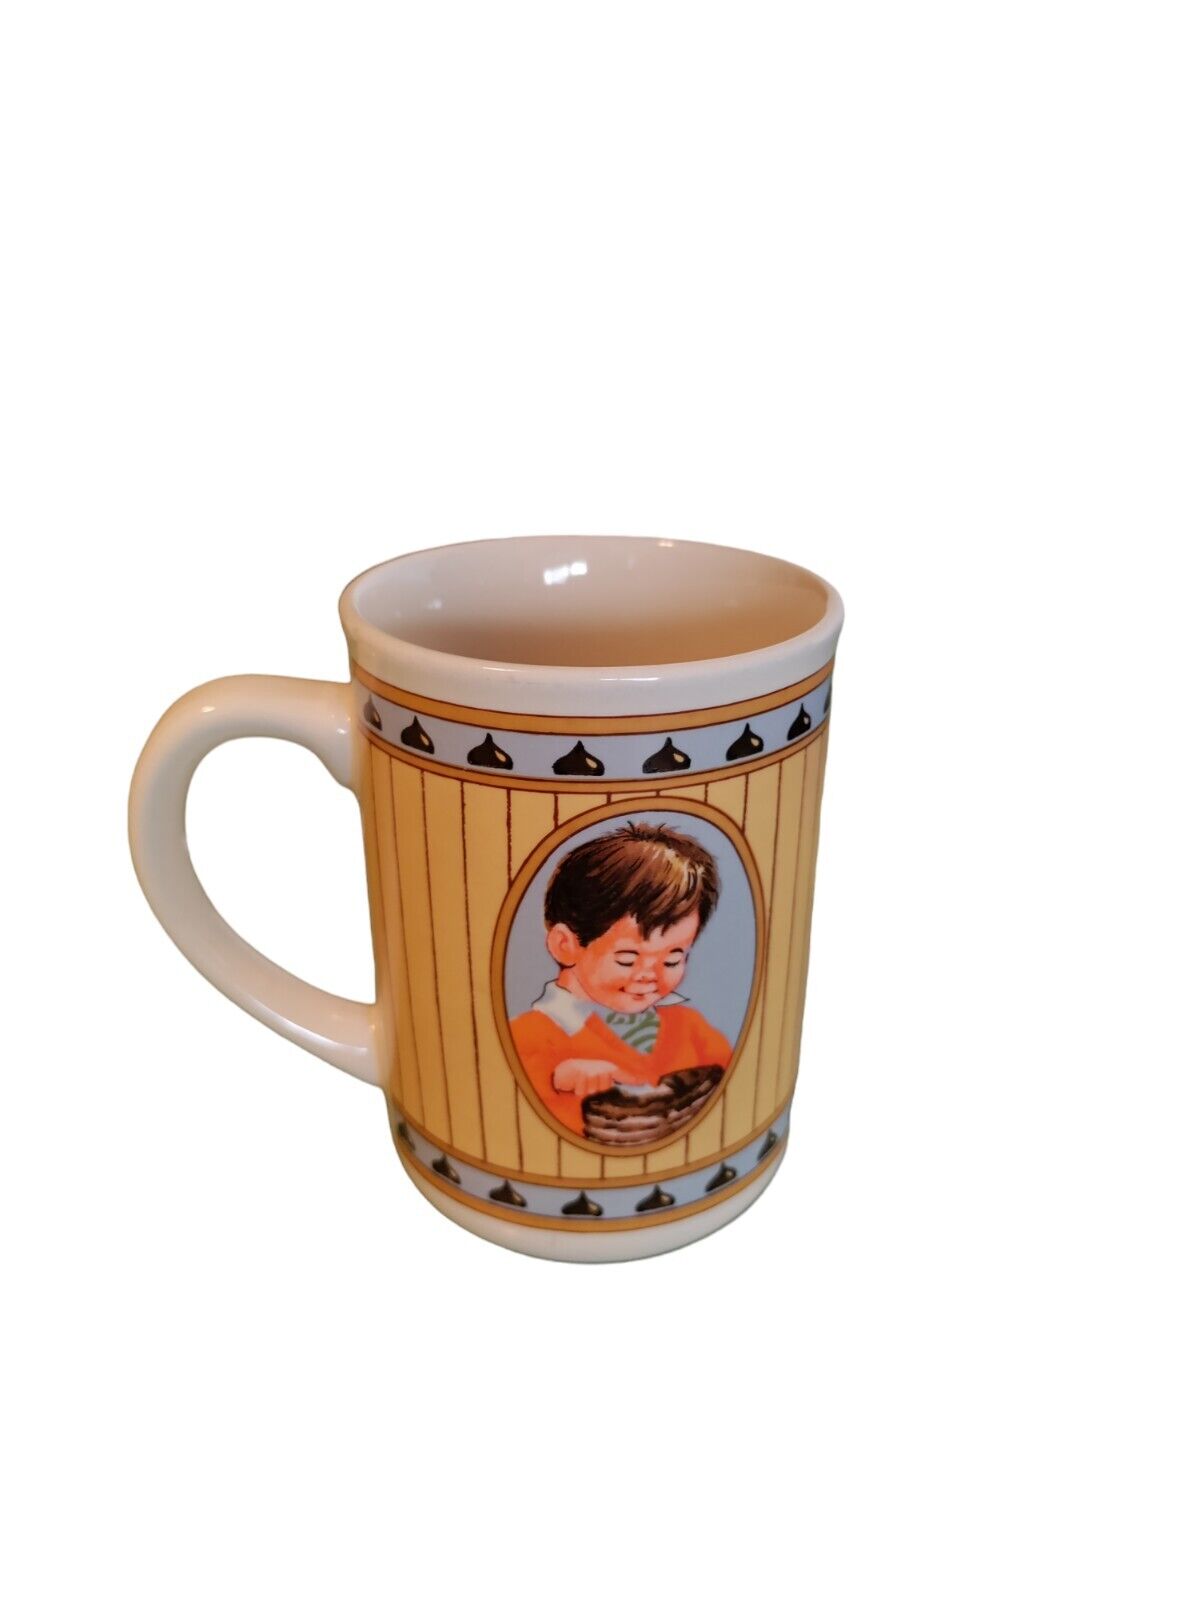 Vintage Hershey's Collectible Mug 